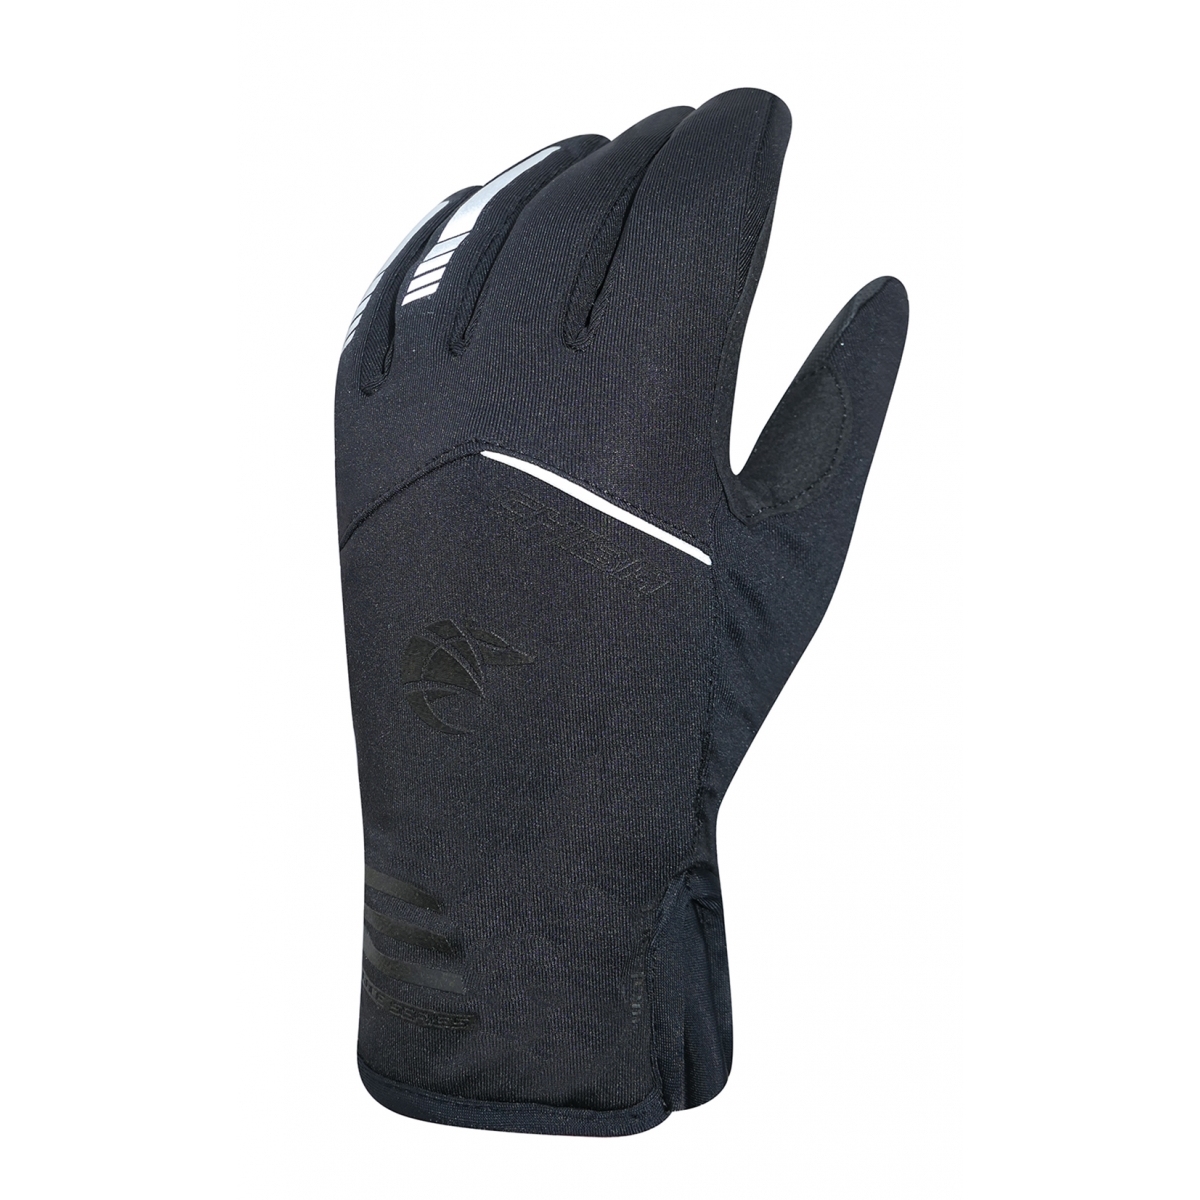 Picture of Chiba 2nd Skin Light Ski Gloves - black